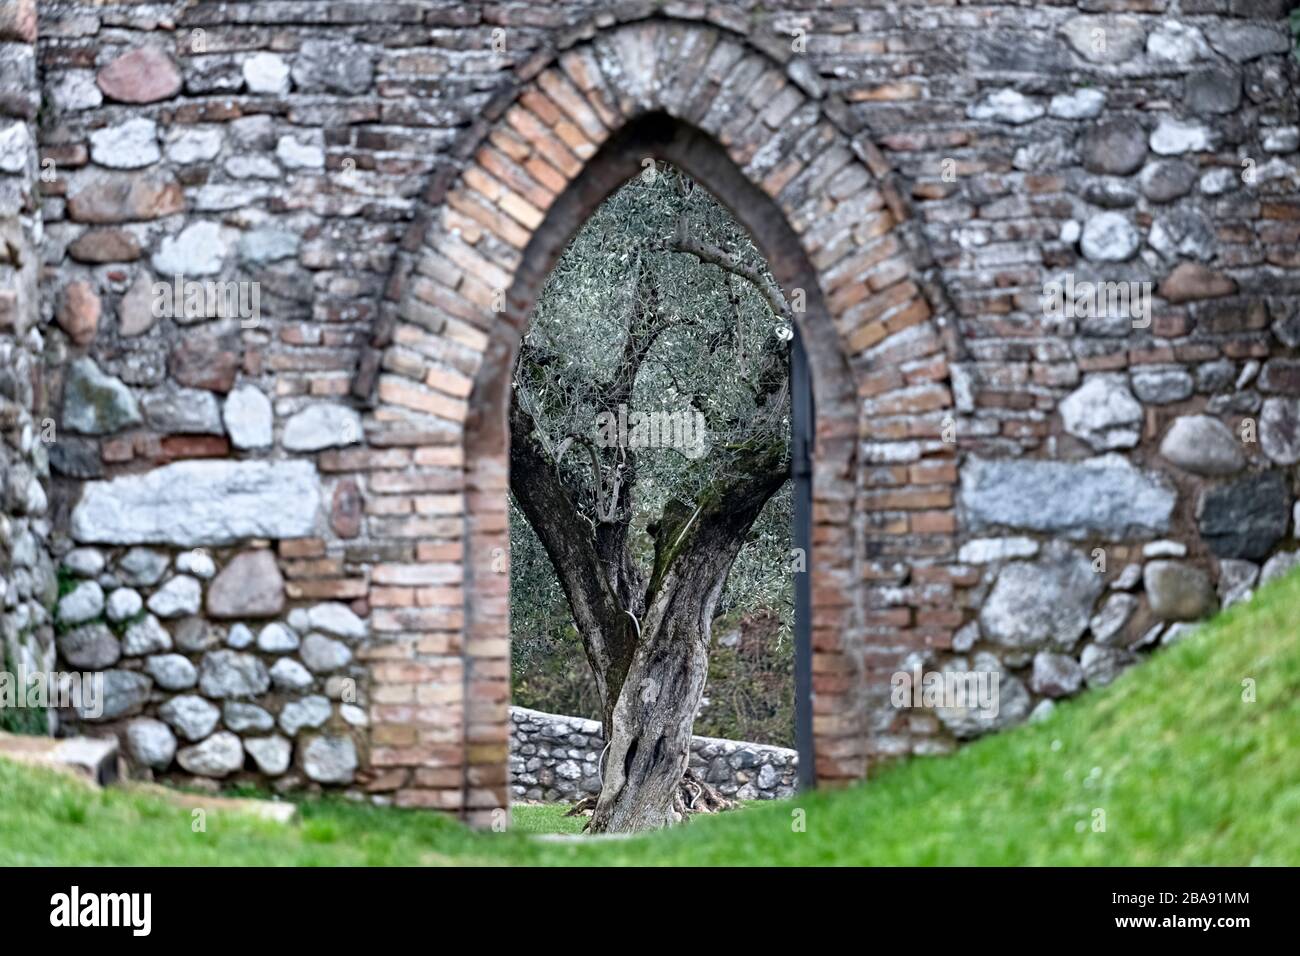 Rocca di Lonato: Un portail médiéval encadre un olivier. Lonato del Garda, province de Brescia, Lombardie, Italie, Europe. Banque D'Images